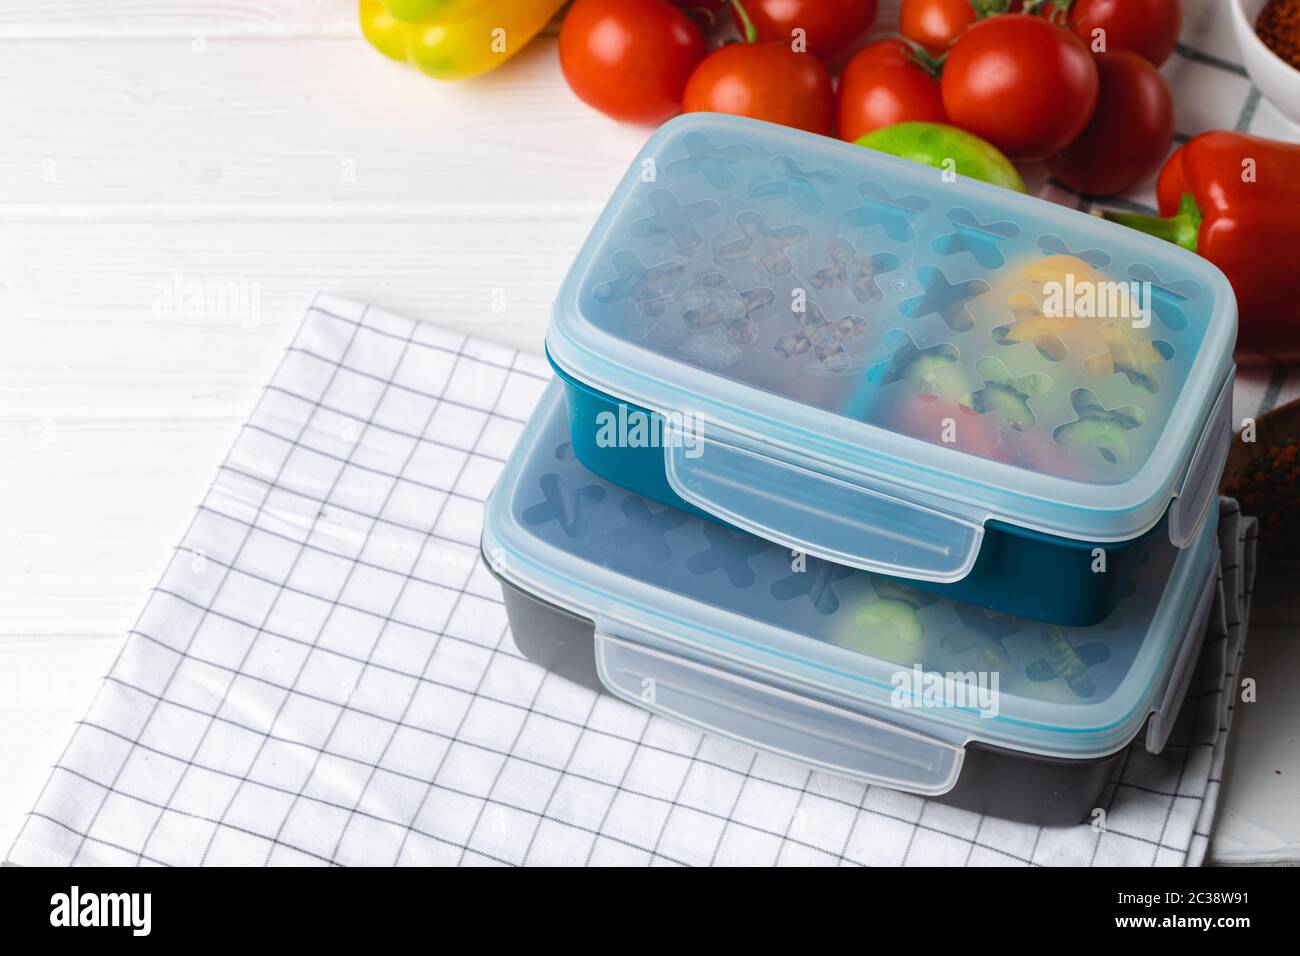 https://c8.alamy.com/comp/2C38W91/closed-plastic-lunch-box-on-kitchen-table-2C38W91.jpg